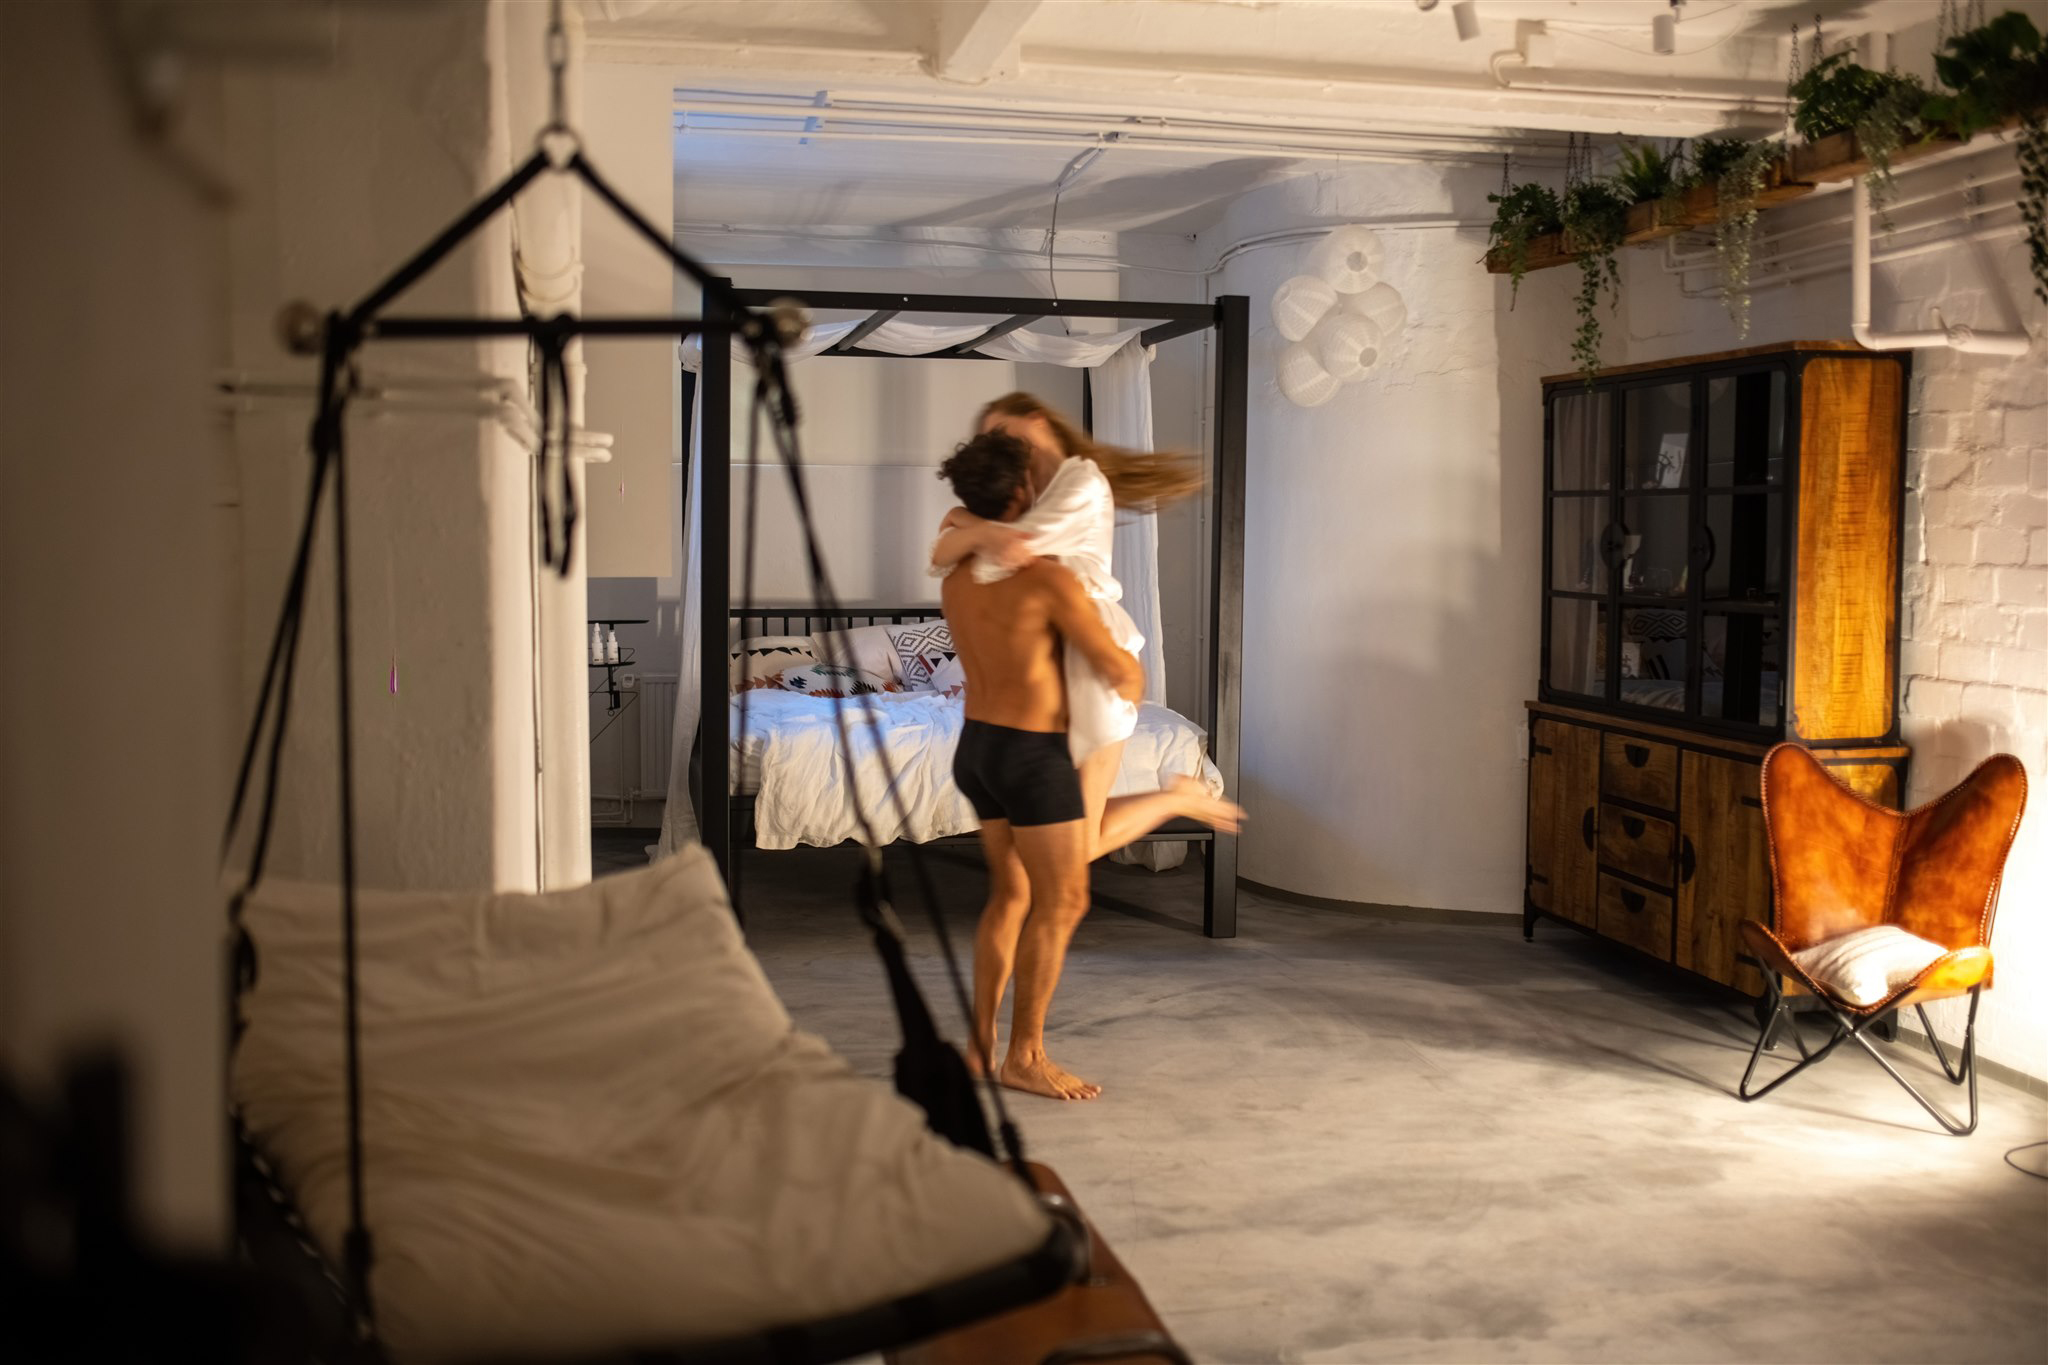 room8 Hamburg - Sex hotel or couple retreat? image picture